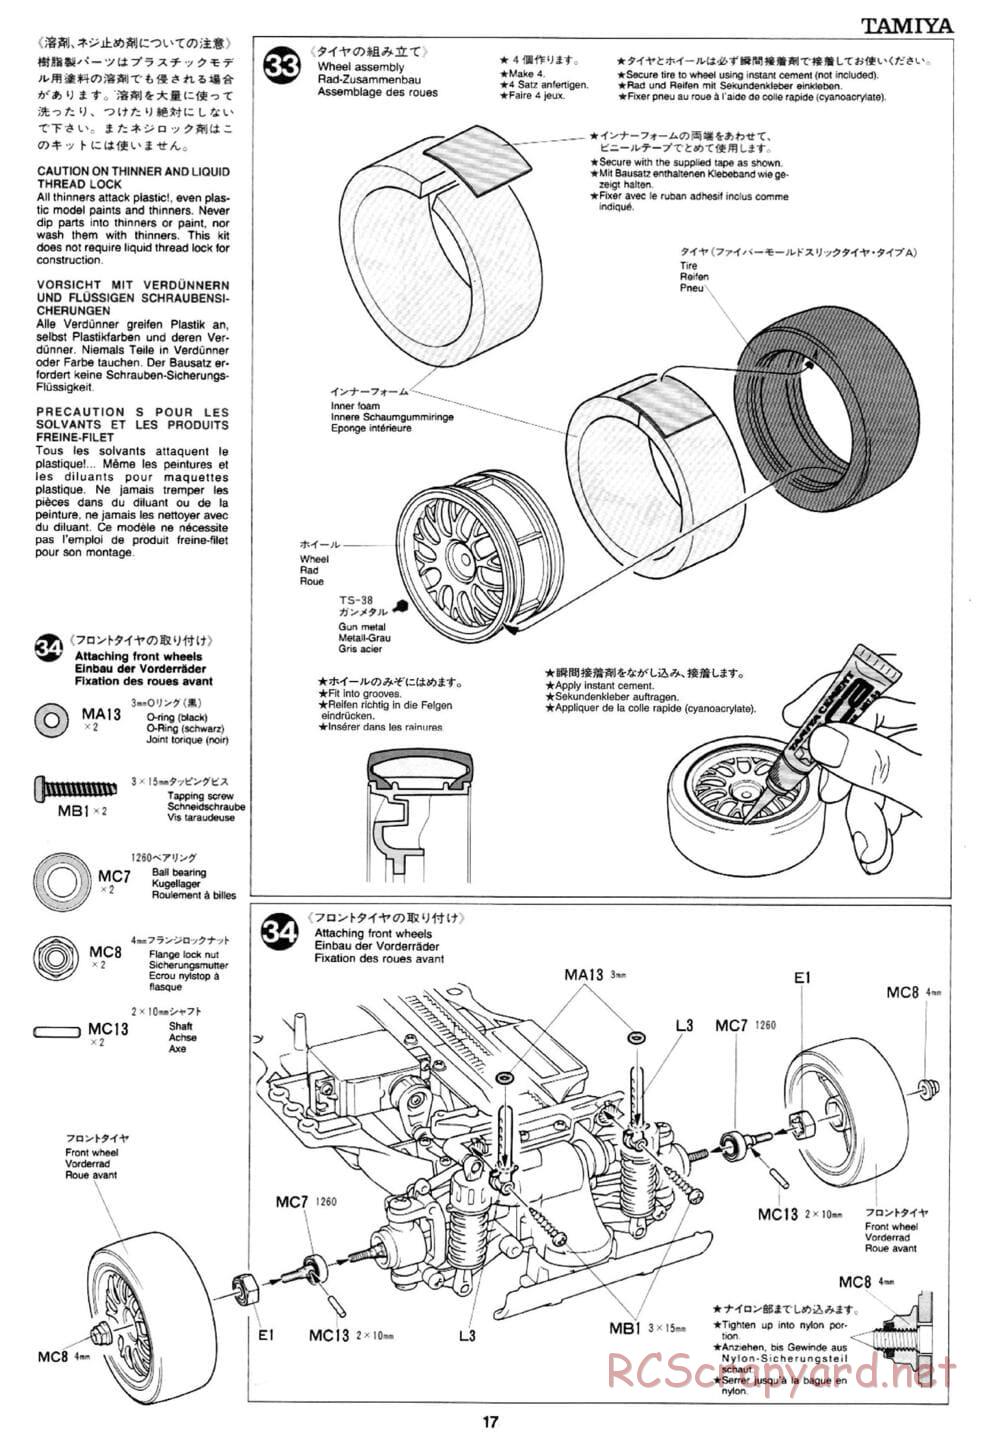 Tamiya - Mobil 1 NSX - TA-03R Chassis - Manual - Page 17